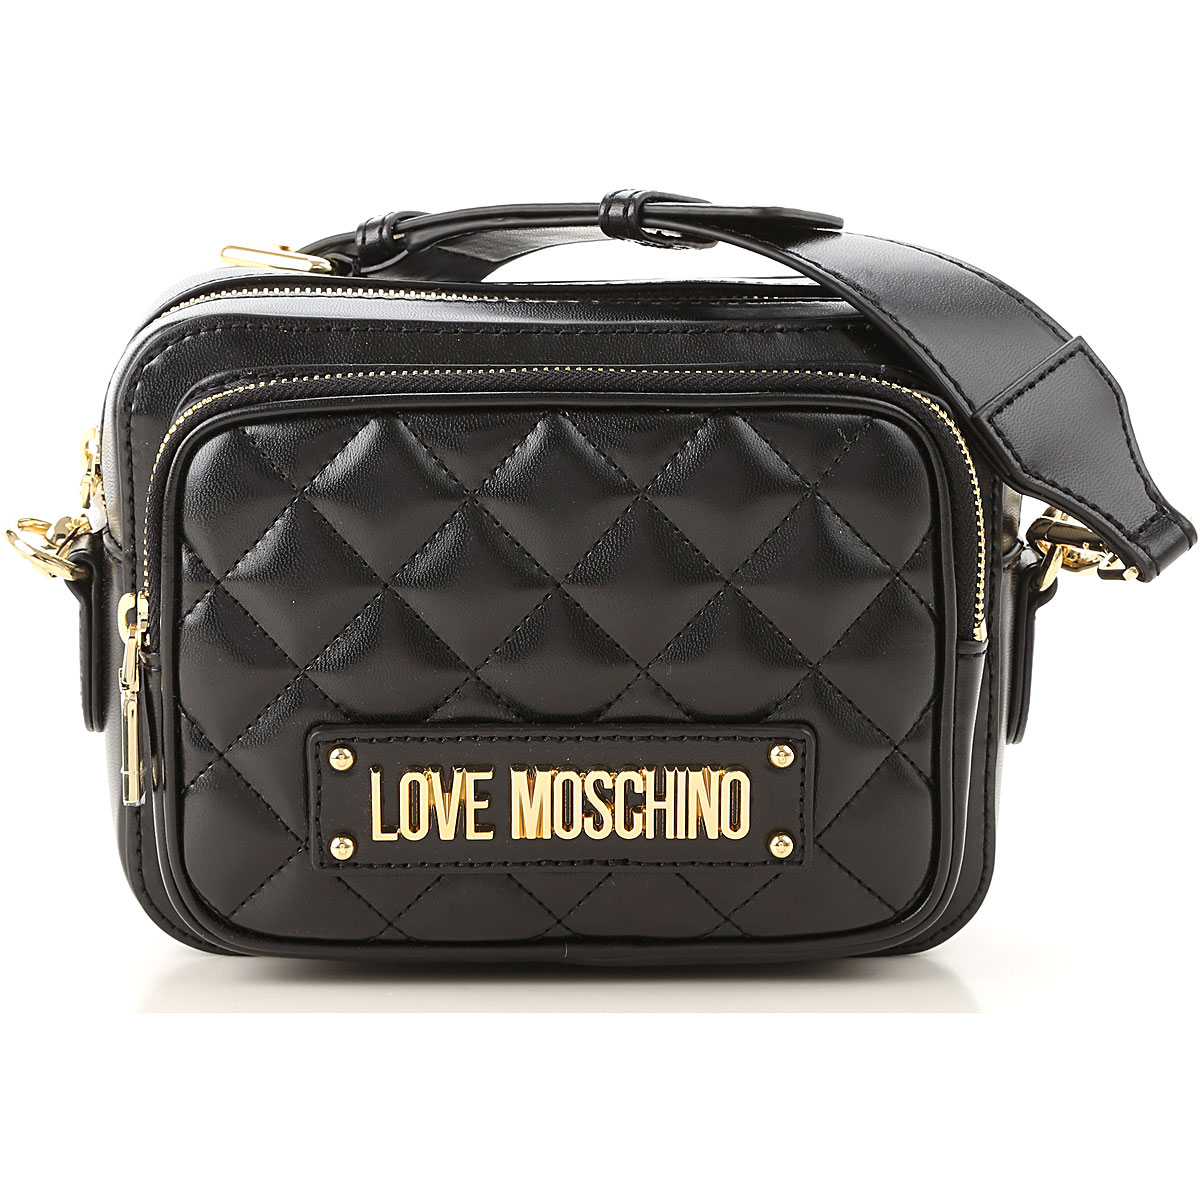 Handbags Moschino, Style code: jc4004pp17la0000--